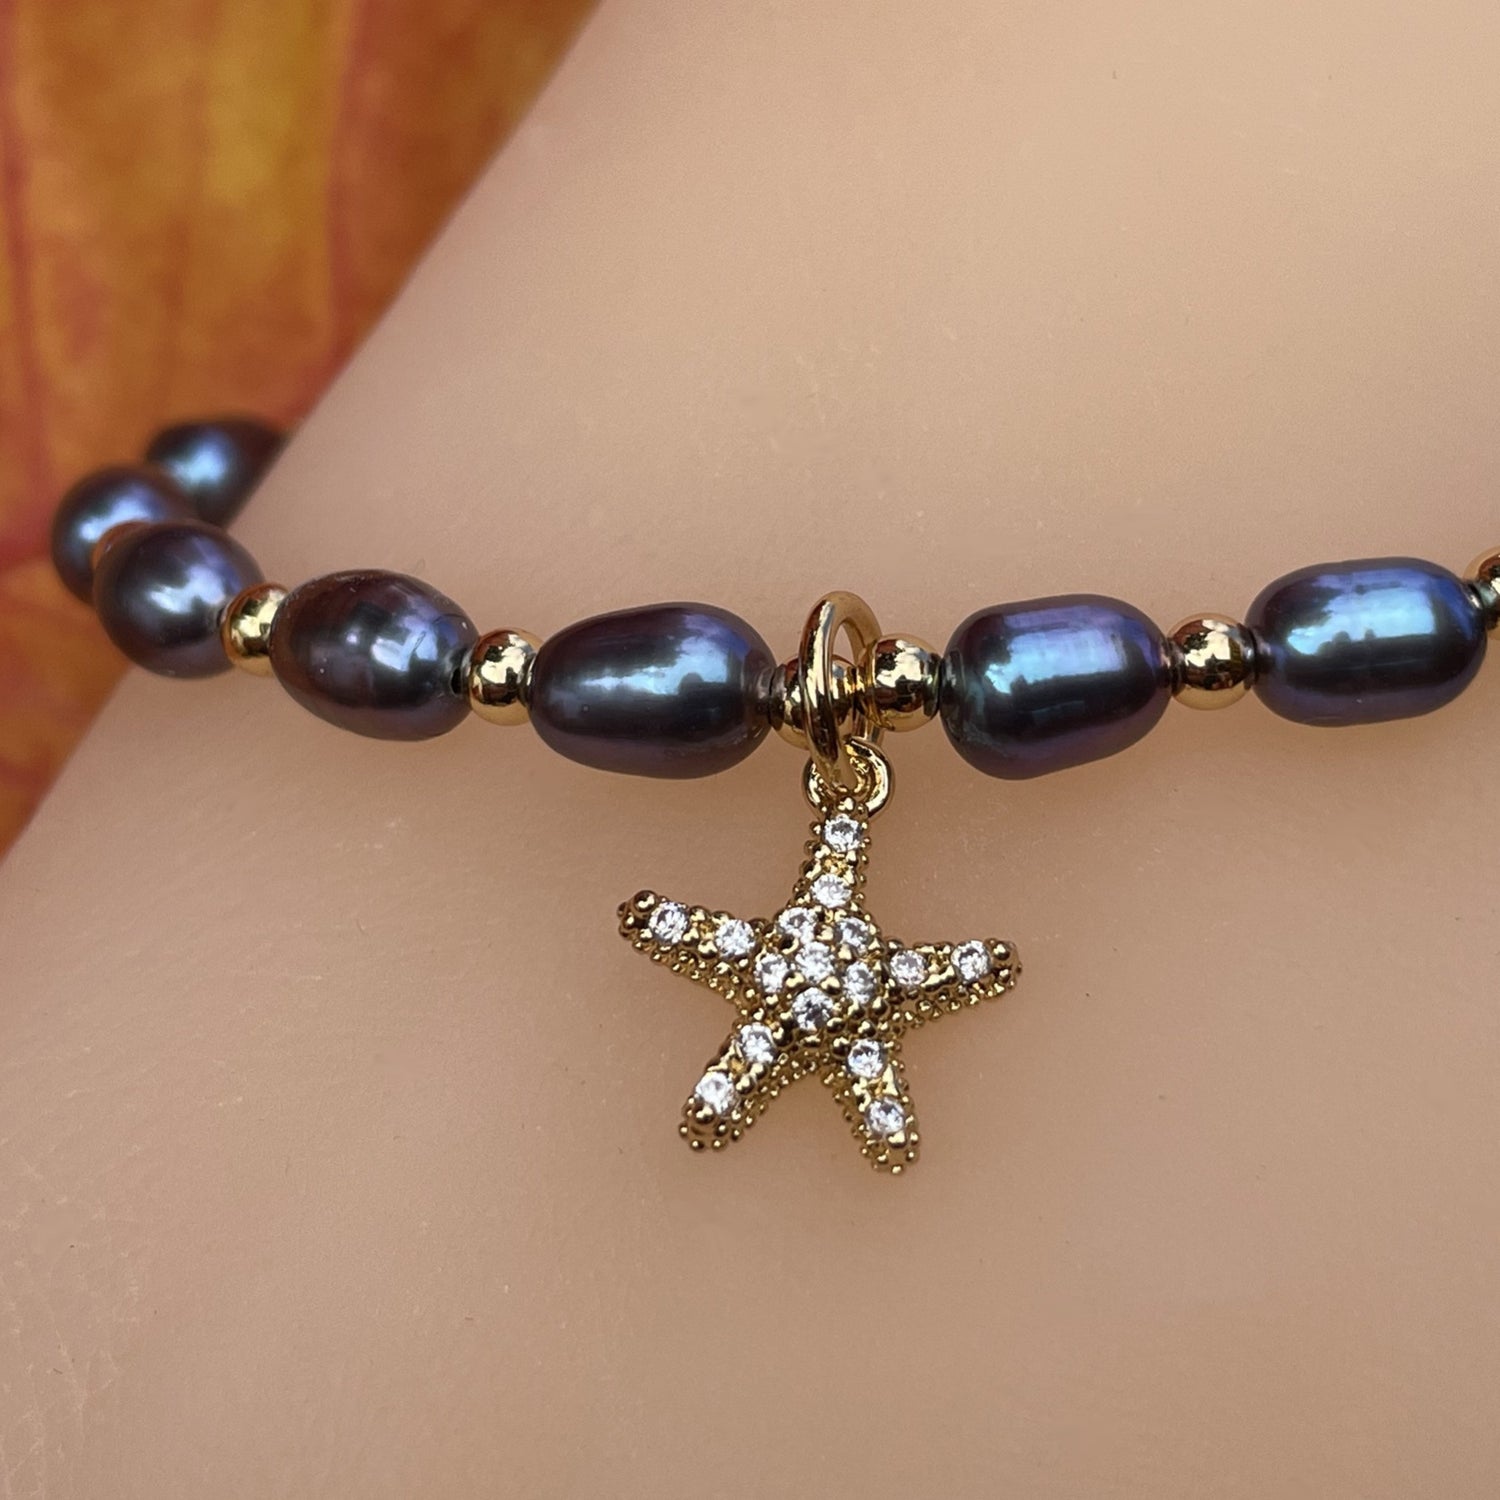 Freshwater Black Pearl Adjustable Bracelet with Starfish CZ Charm